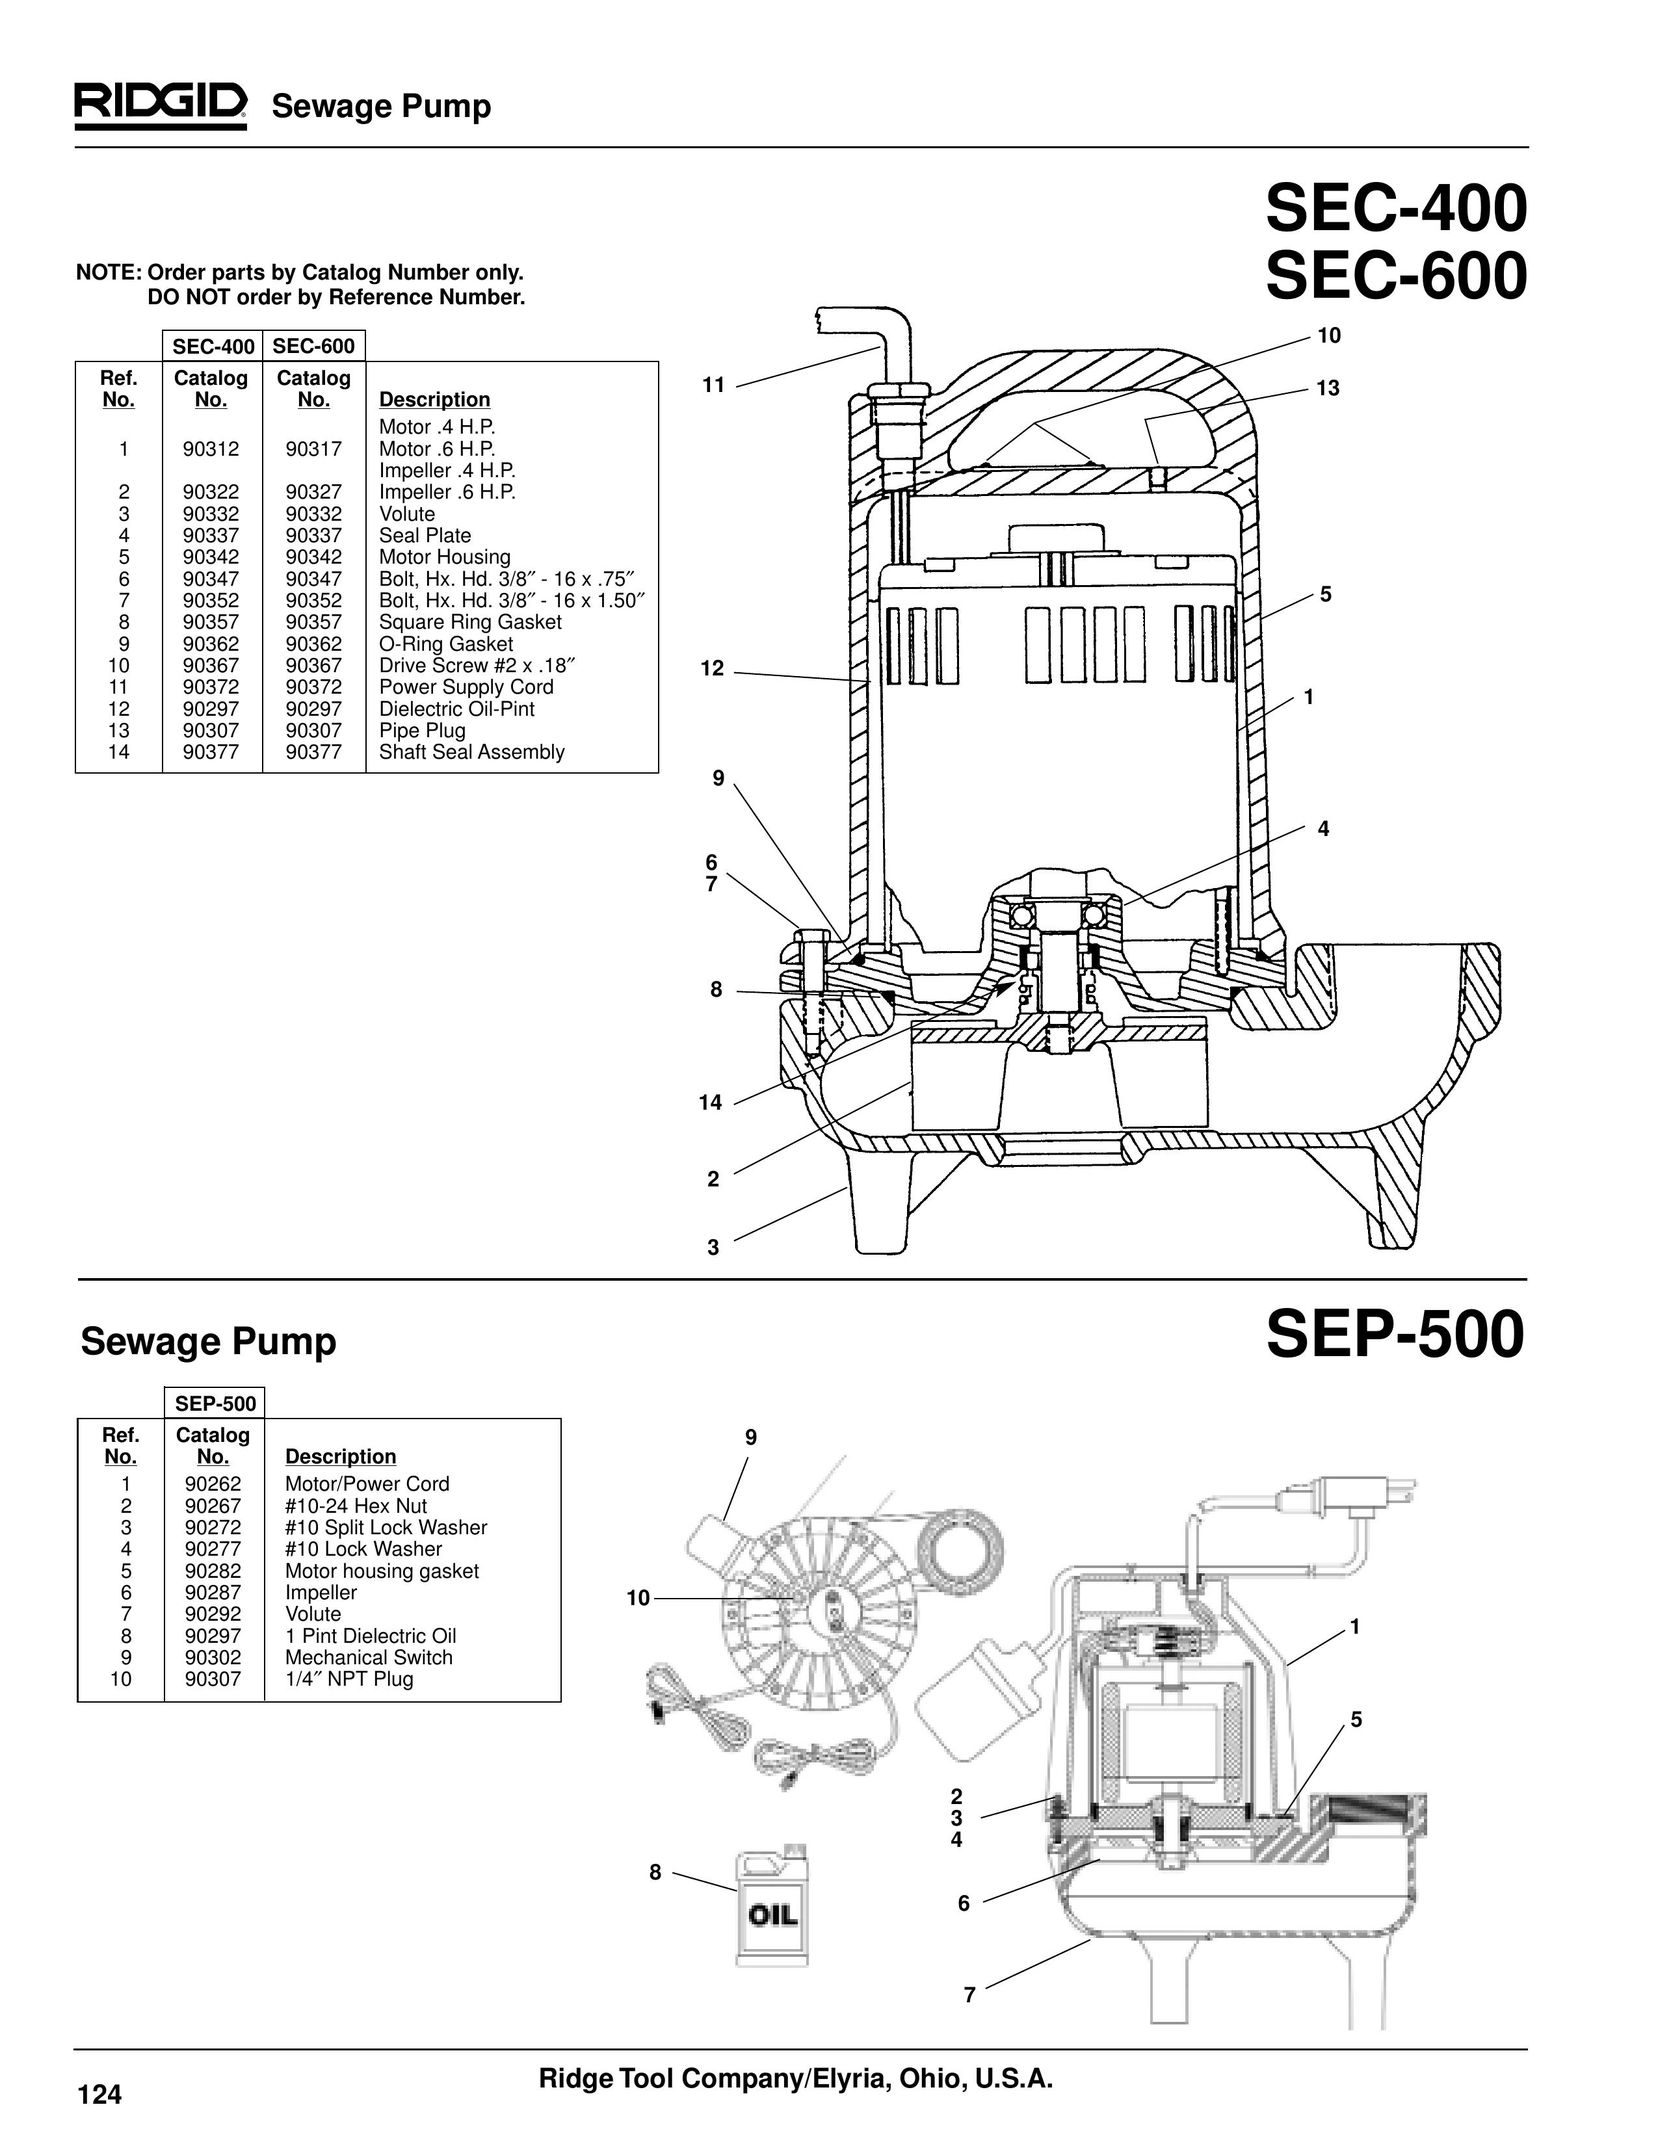 RIDGID SEP-500 Plumbing Product User Manual